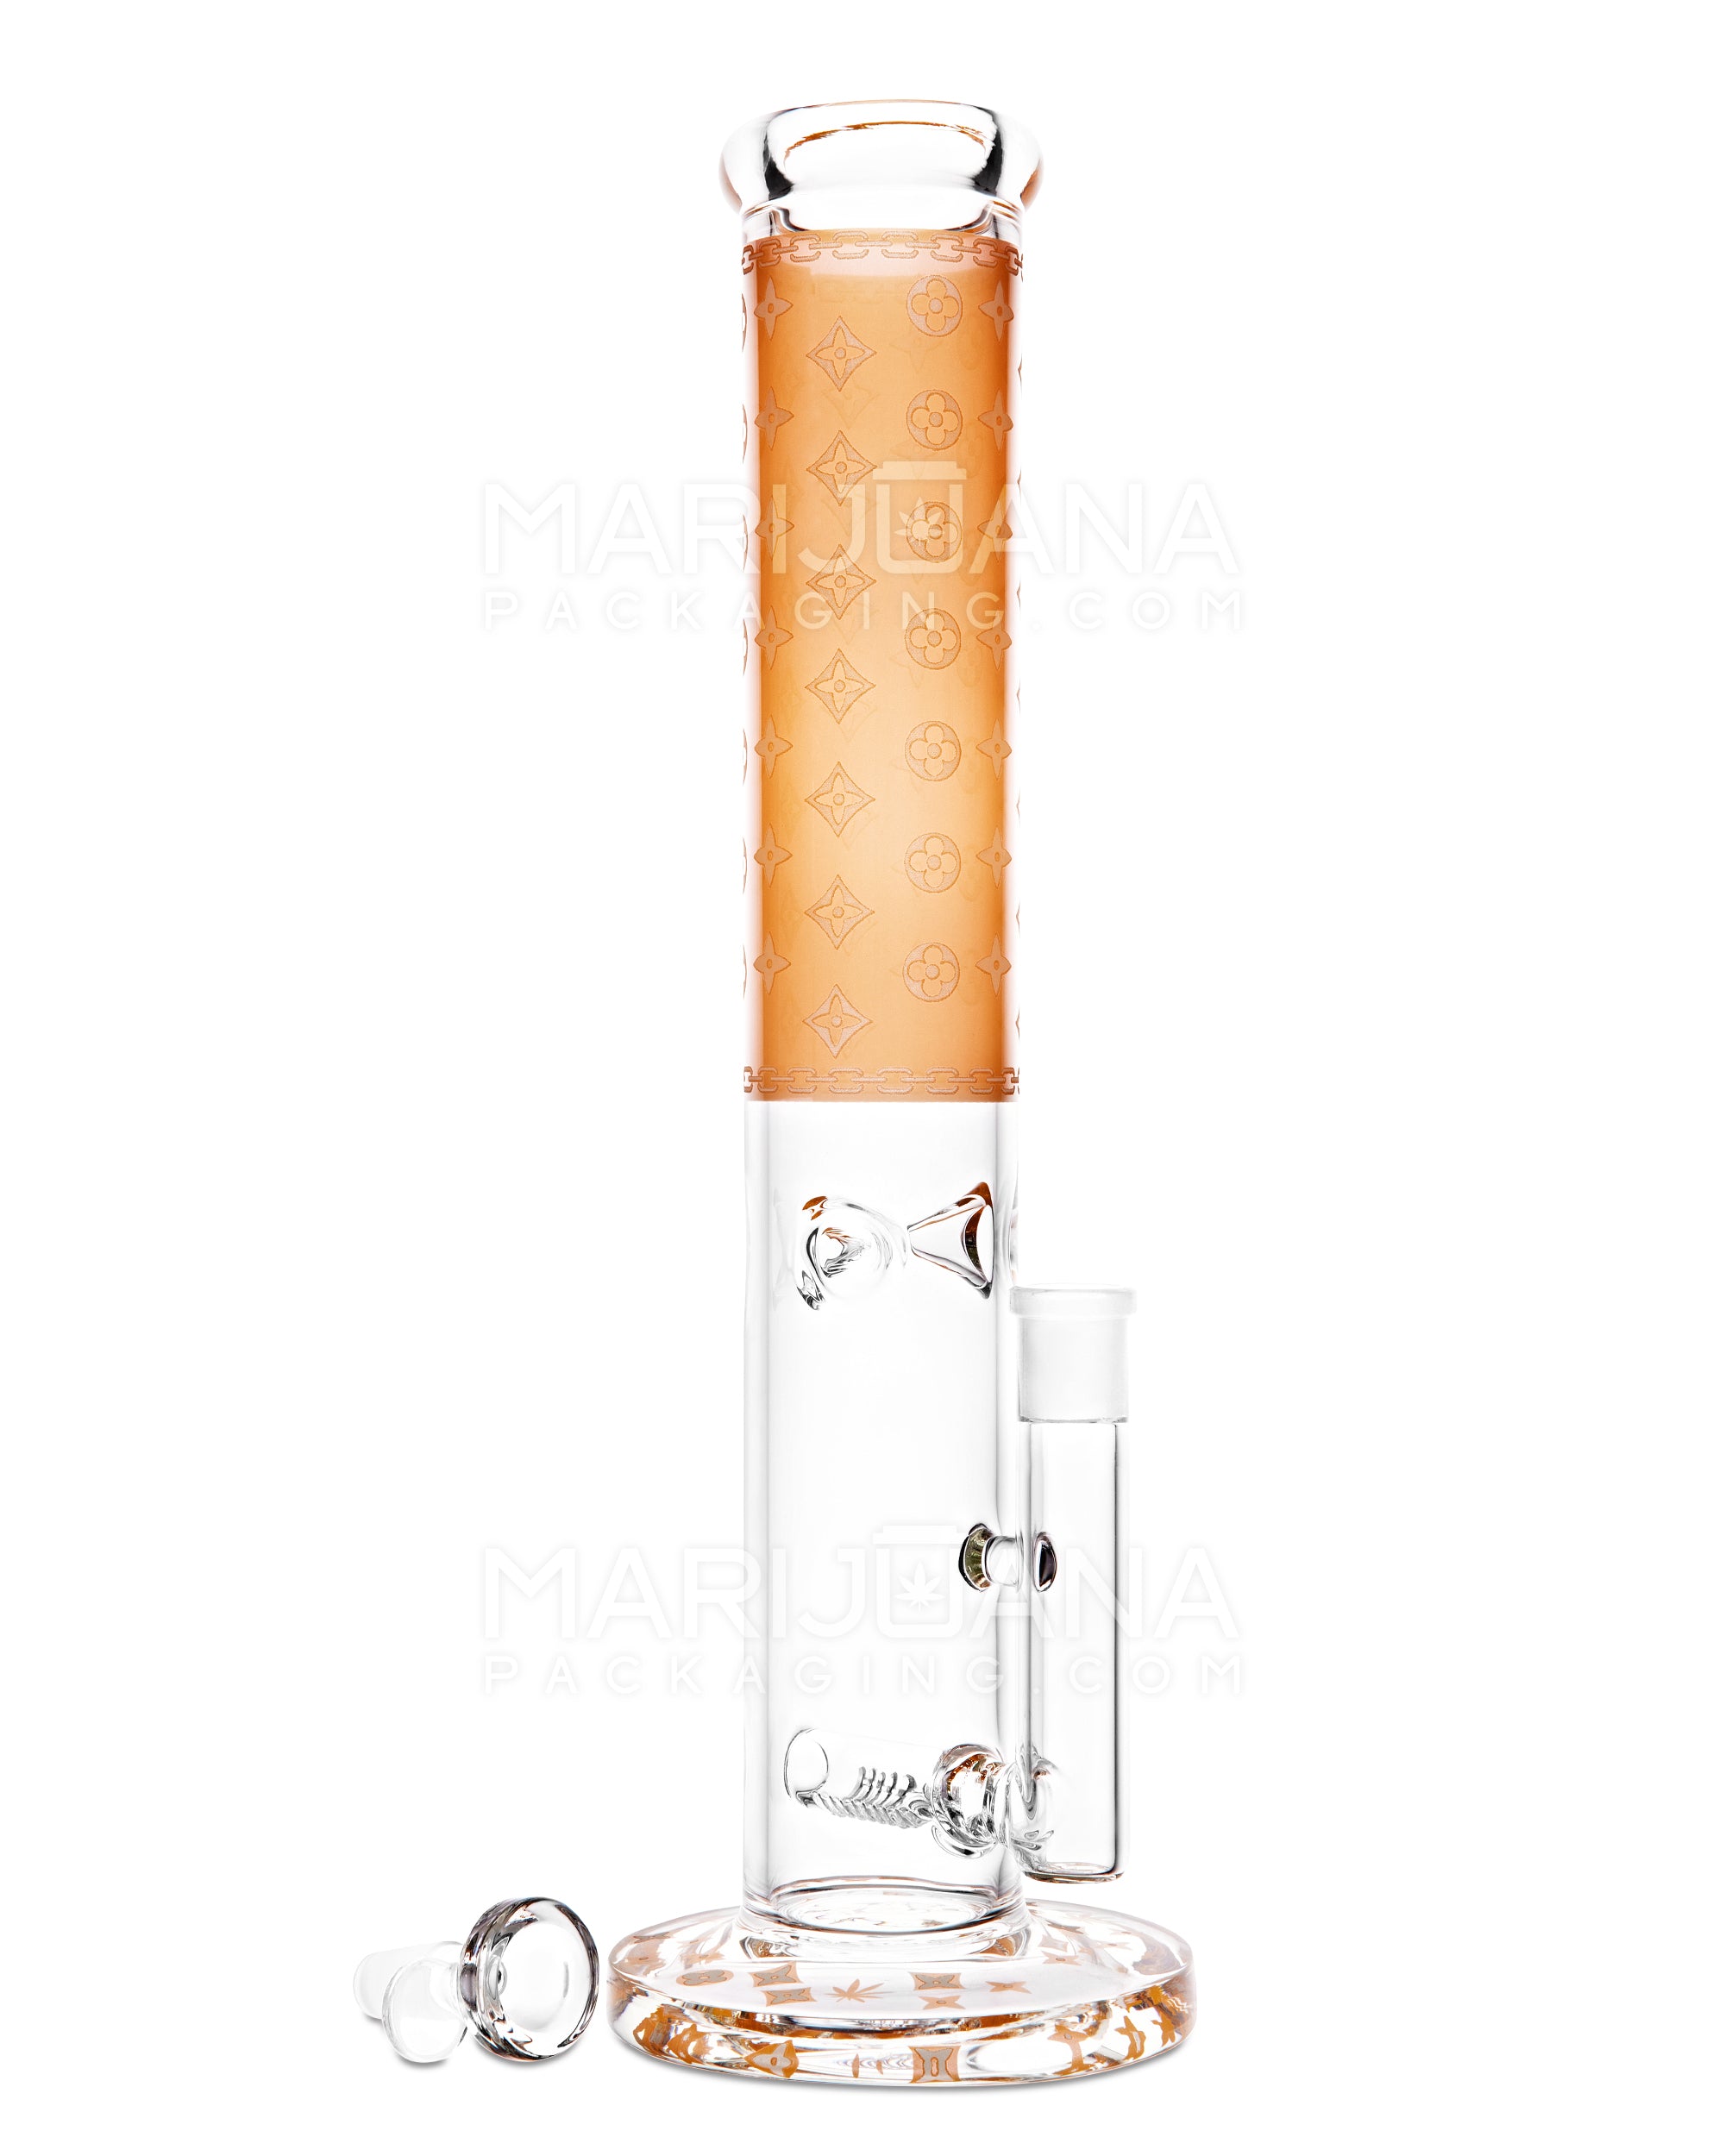 Straight Neck Luxury Design Inline Perc Glass Water Pipe w/ Ice Catcher | 14in Tall - 14mm Bowl - Orange - 2